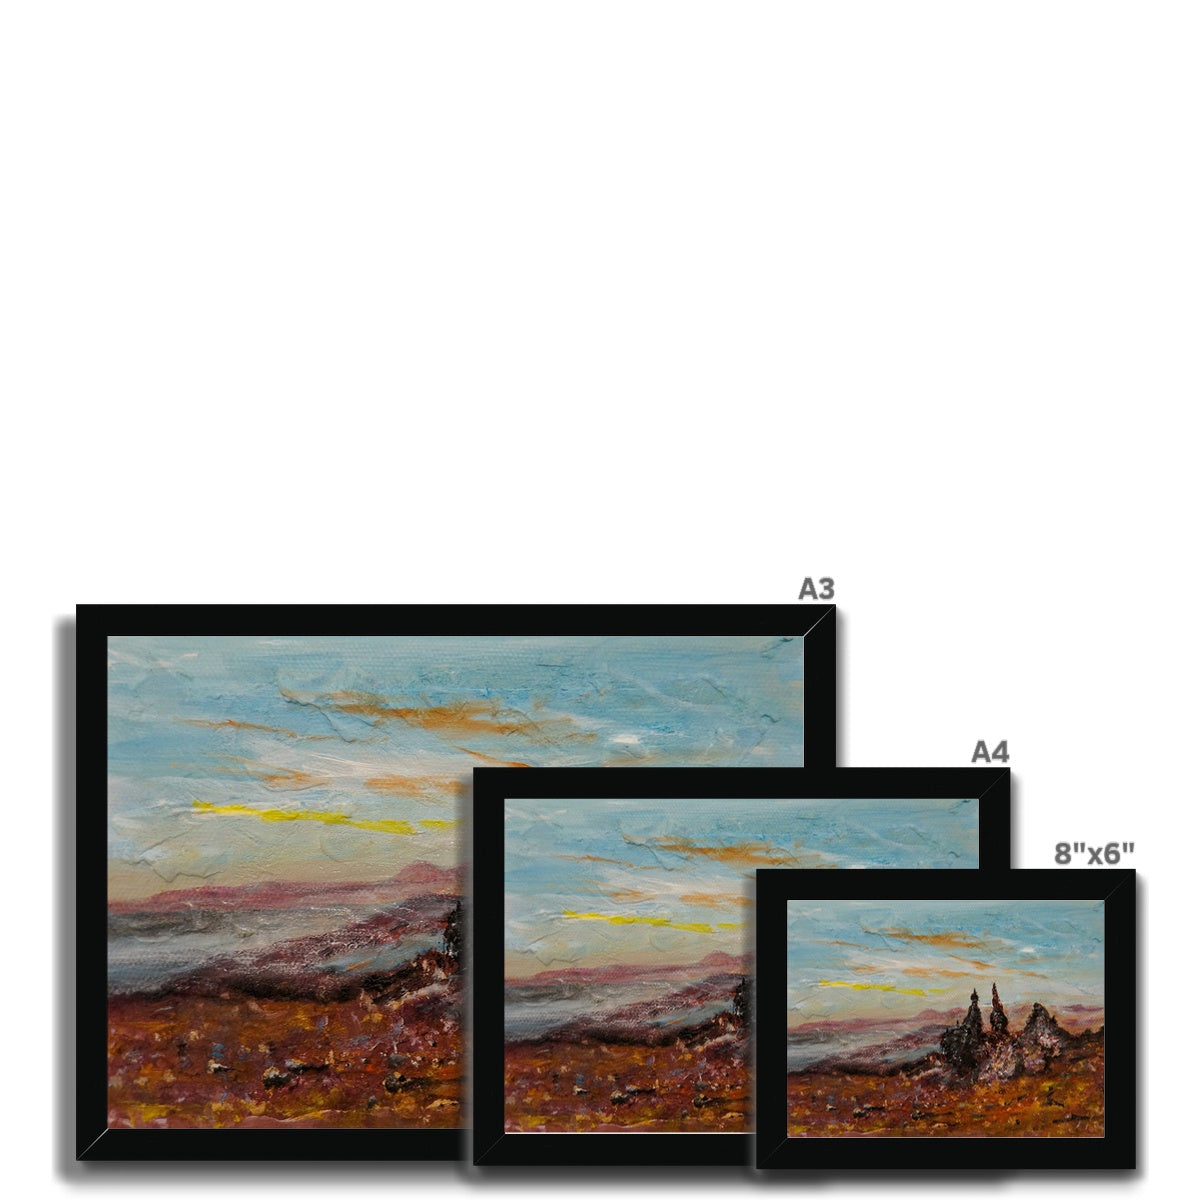 The Storr Skye Painting | Framed Prints From Scotland-Framed Prints-Skye Art Gallery-Paintings, Prints, Homeware, Art Gifts From Scotland By Scottish Artist Kevin Hunter